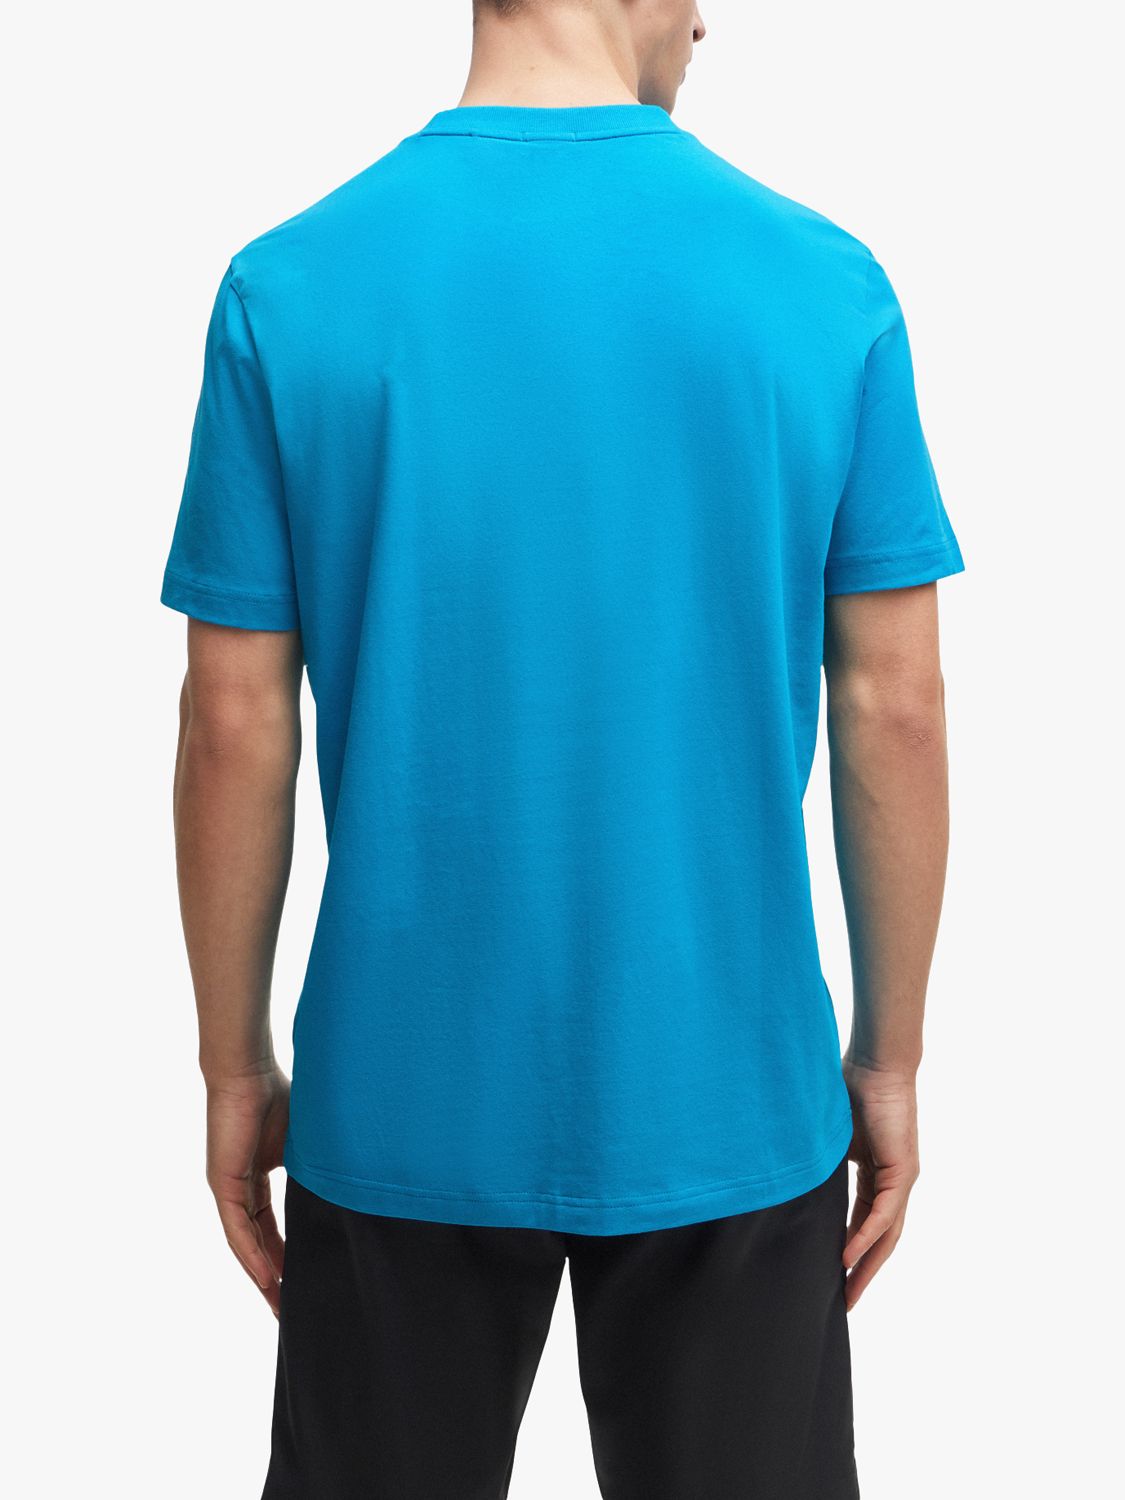 BOSS Short Sleeve Logo T-Shirt, Turquoise/Aqua, XXXXL